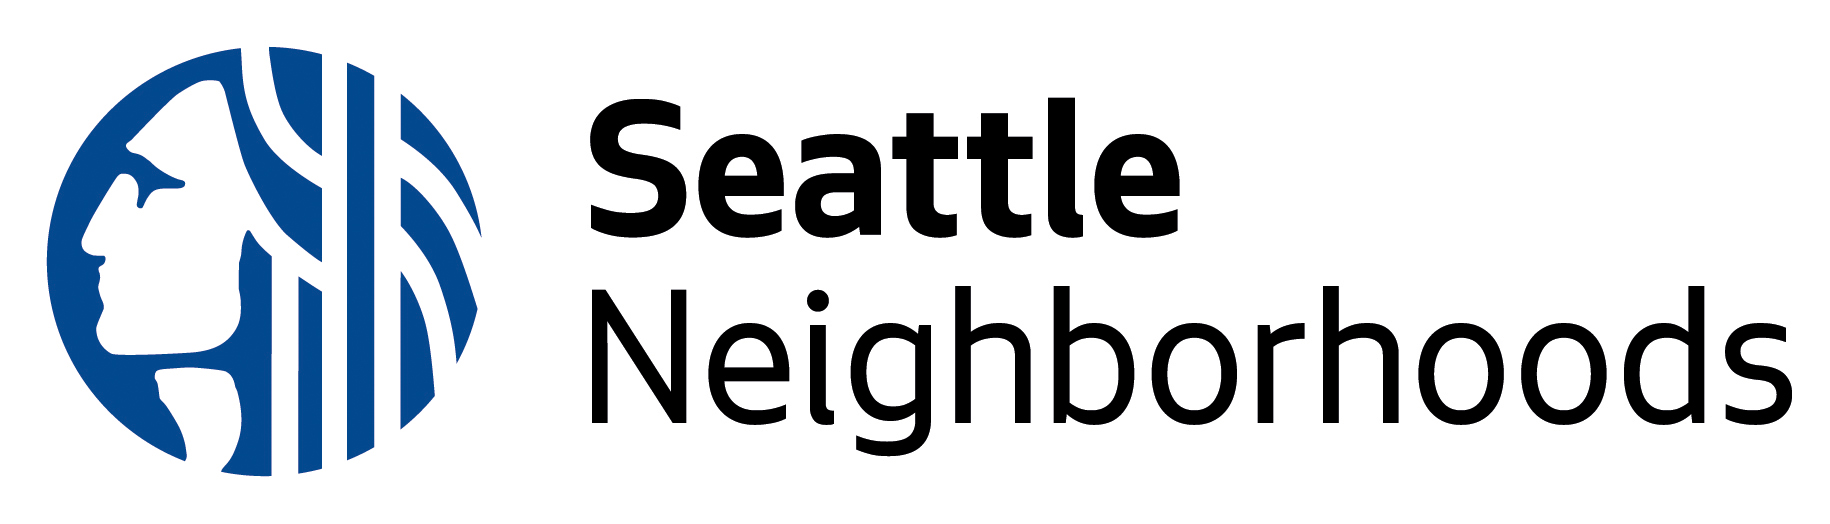 About Us - Neighborhoods | seattle.gov